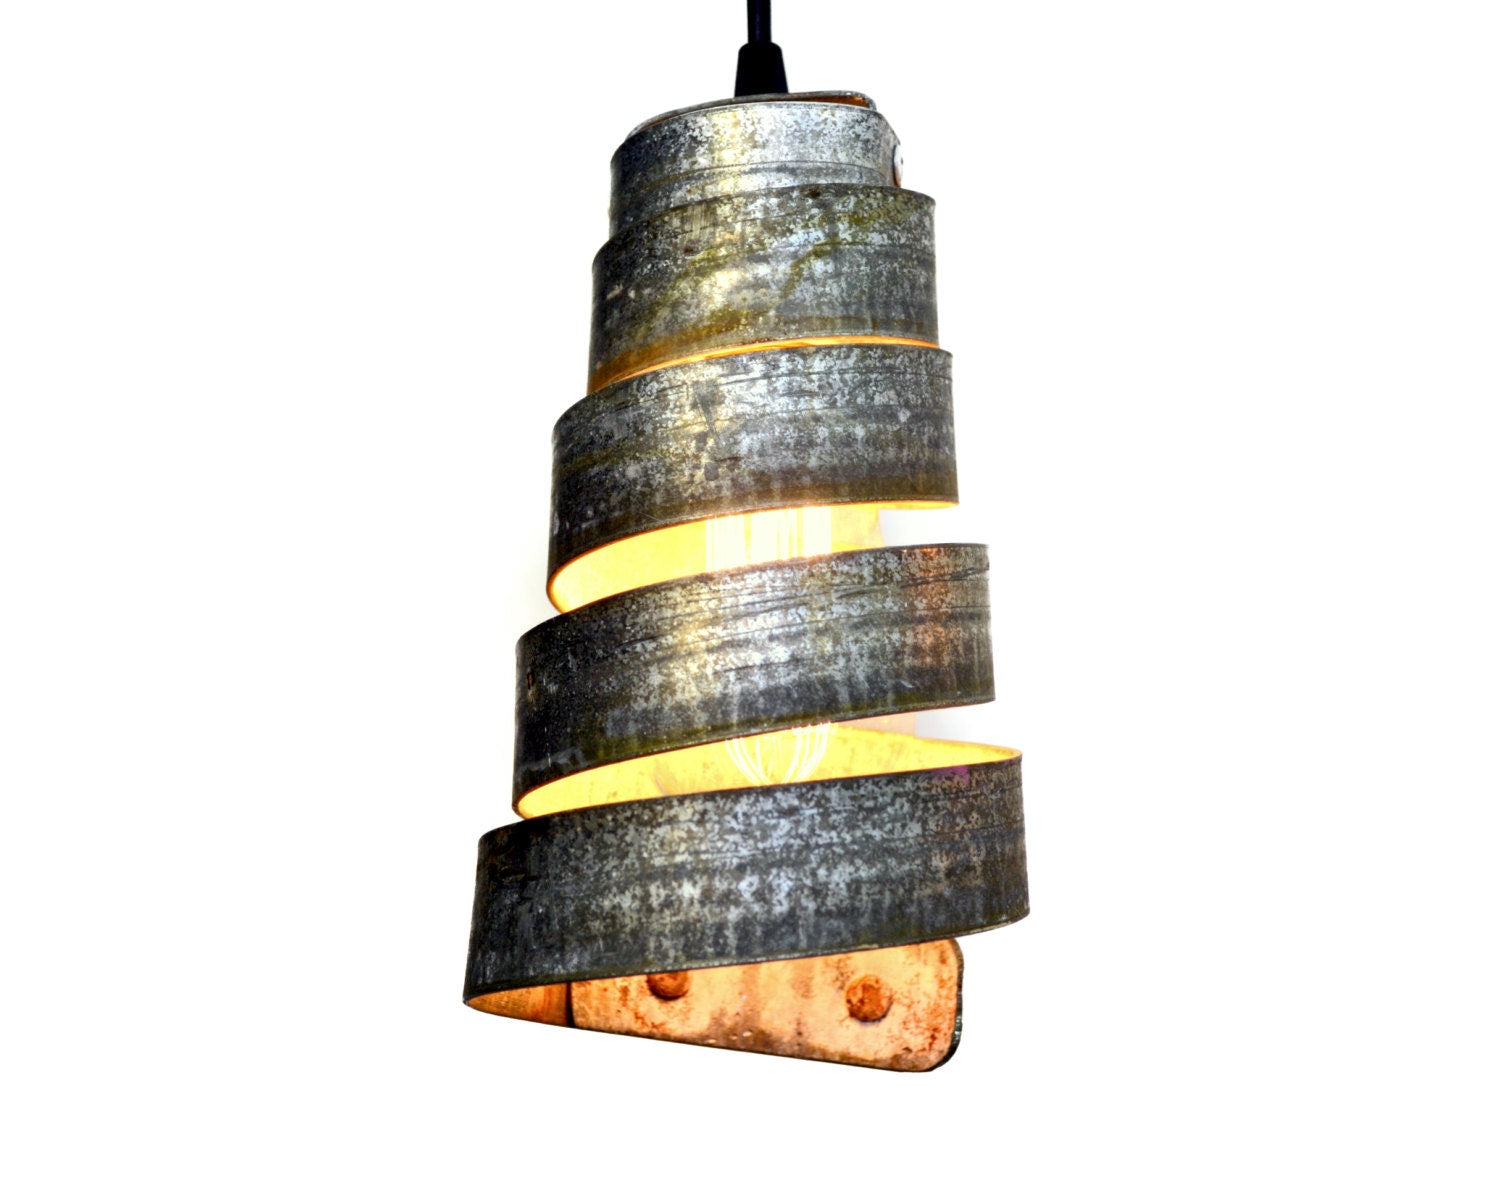 Wine Barrel Ring Pendant Light - Sanna - Made from retired California wine barrel rings. 100% Recycled!